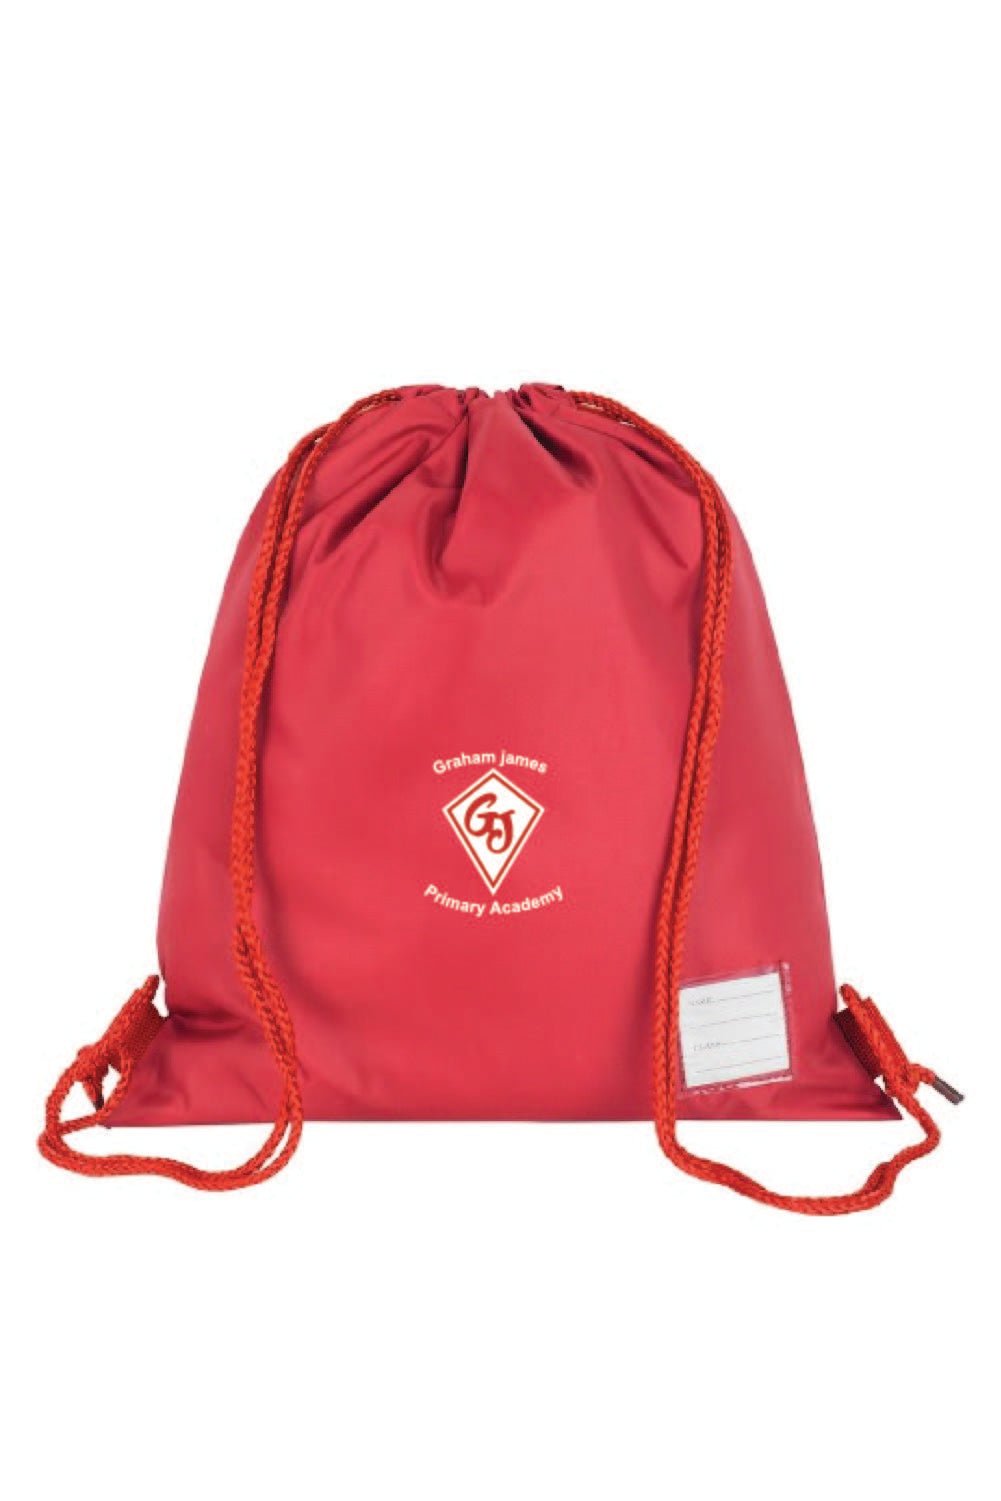 Graham James PE Bag - Uniformwise Schoolwear